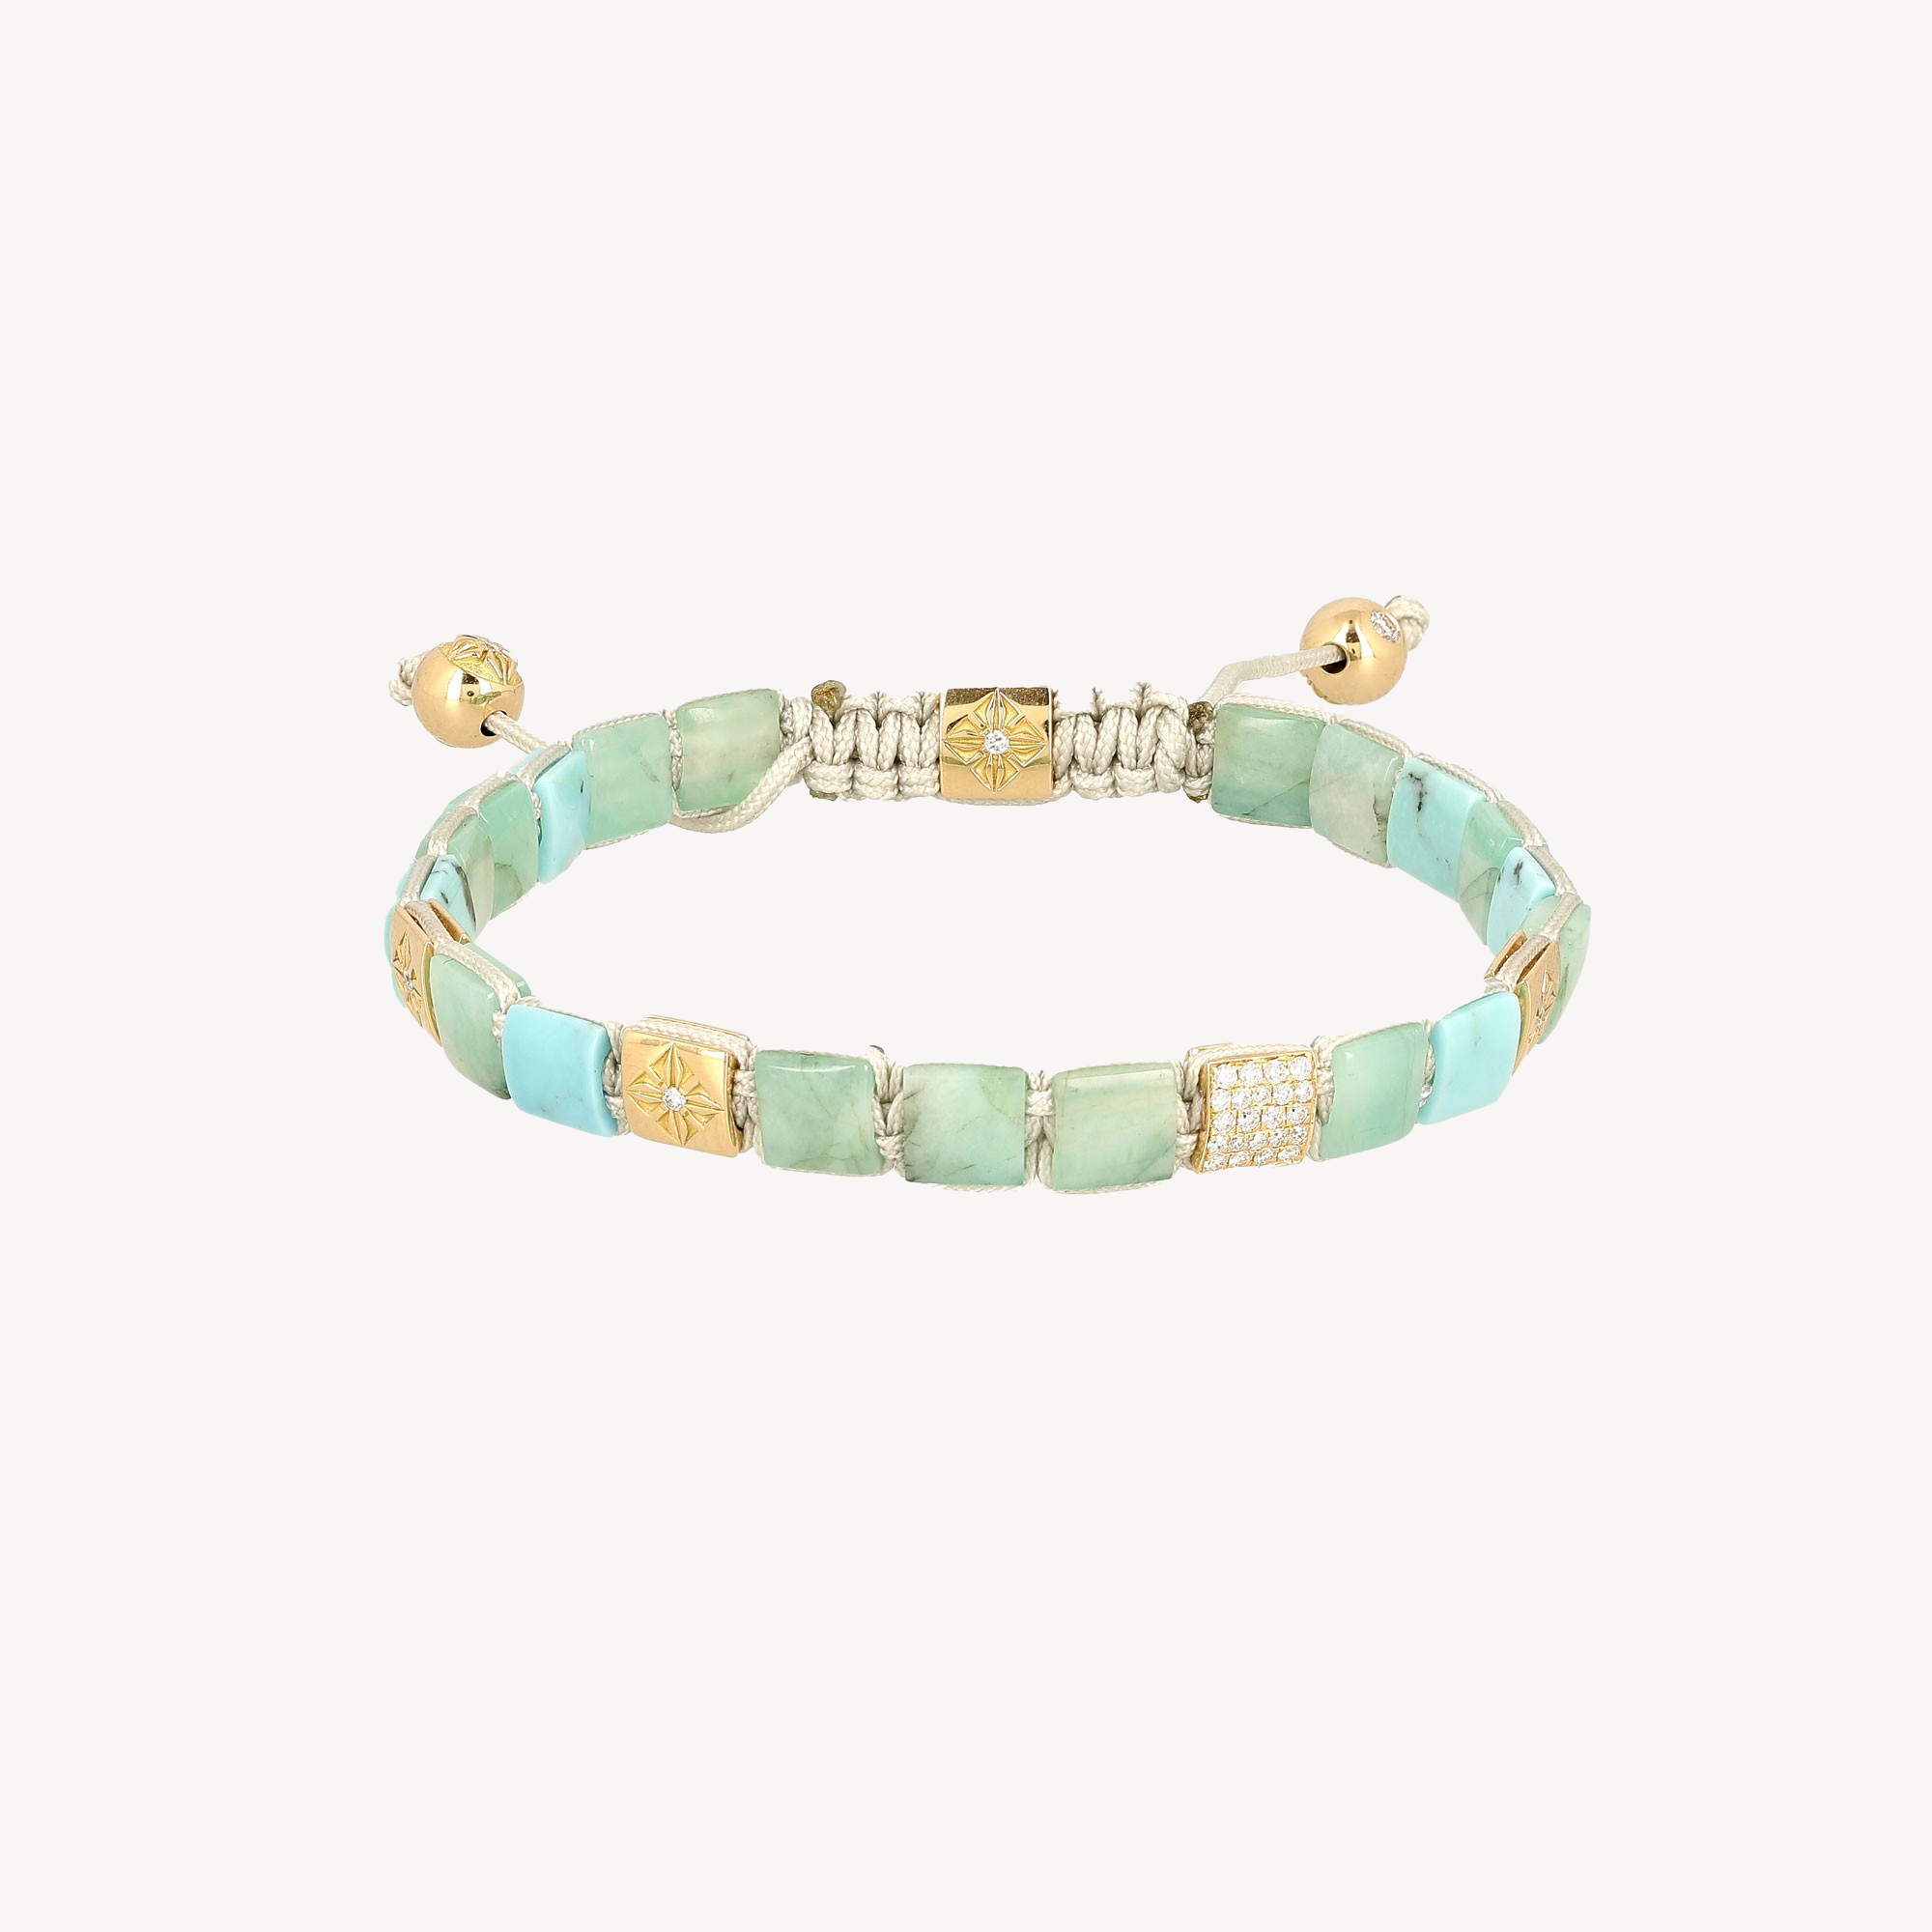 Emerald, Turquoise and White Diamond Bracelet